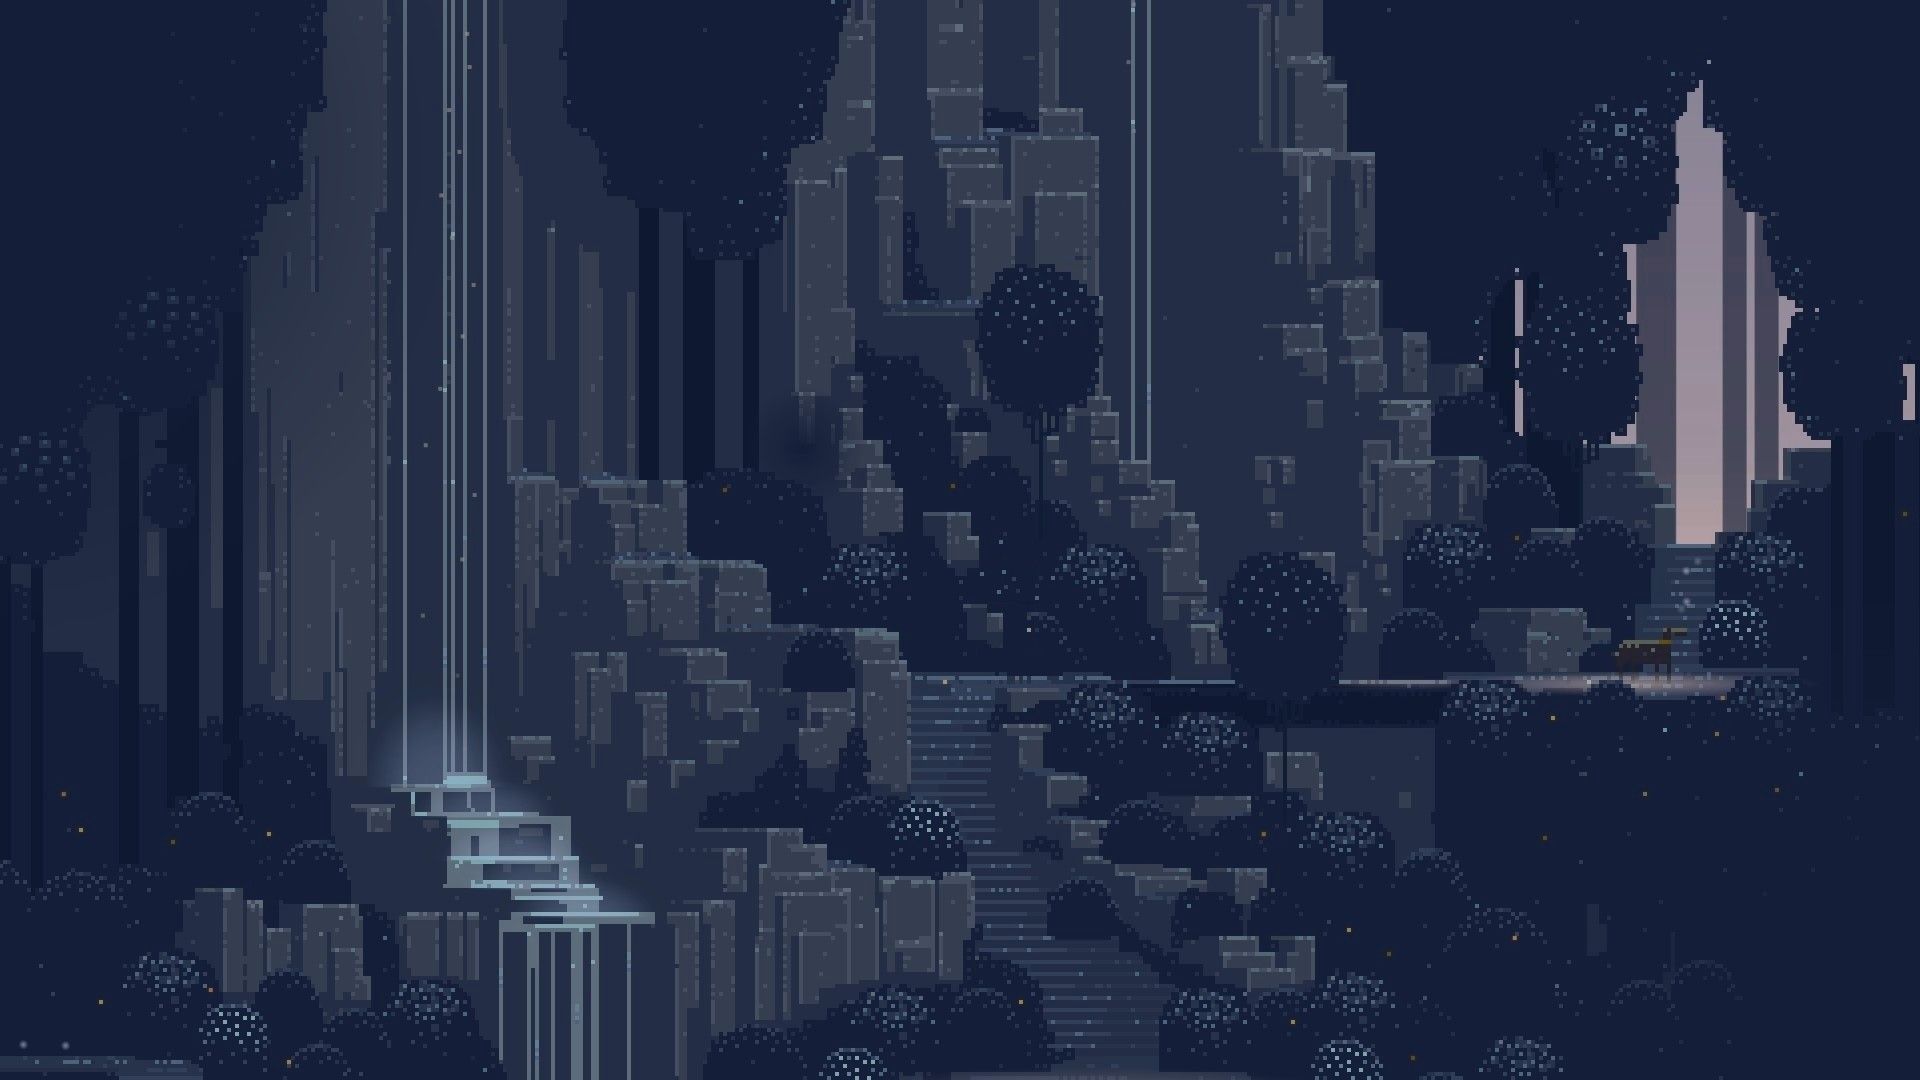 Waterfall (Pixel art) 1920×1080 .reddit.com